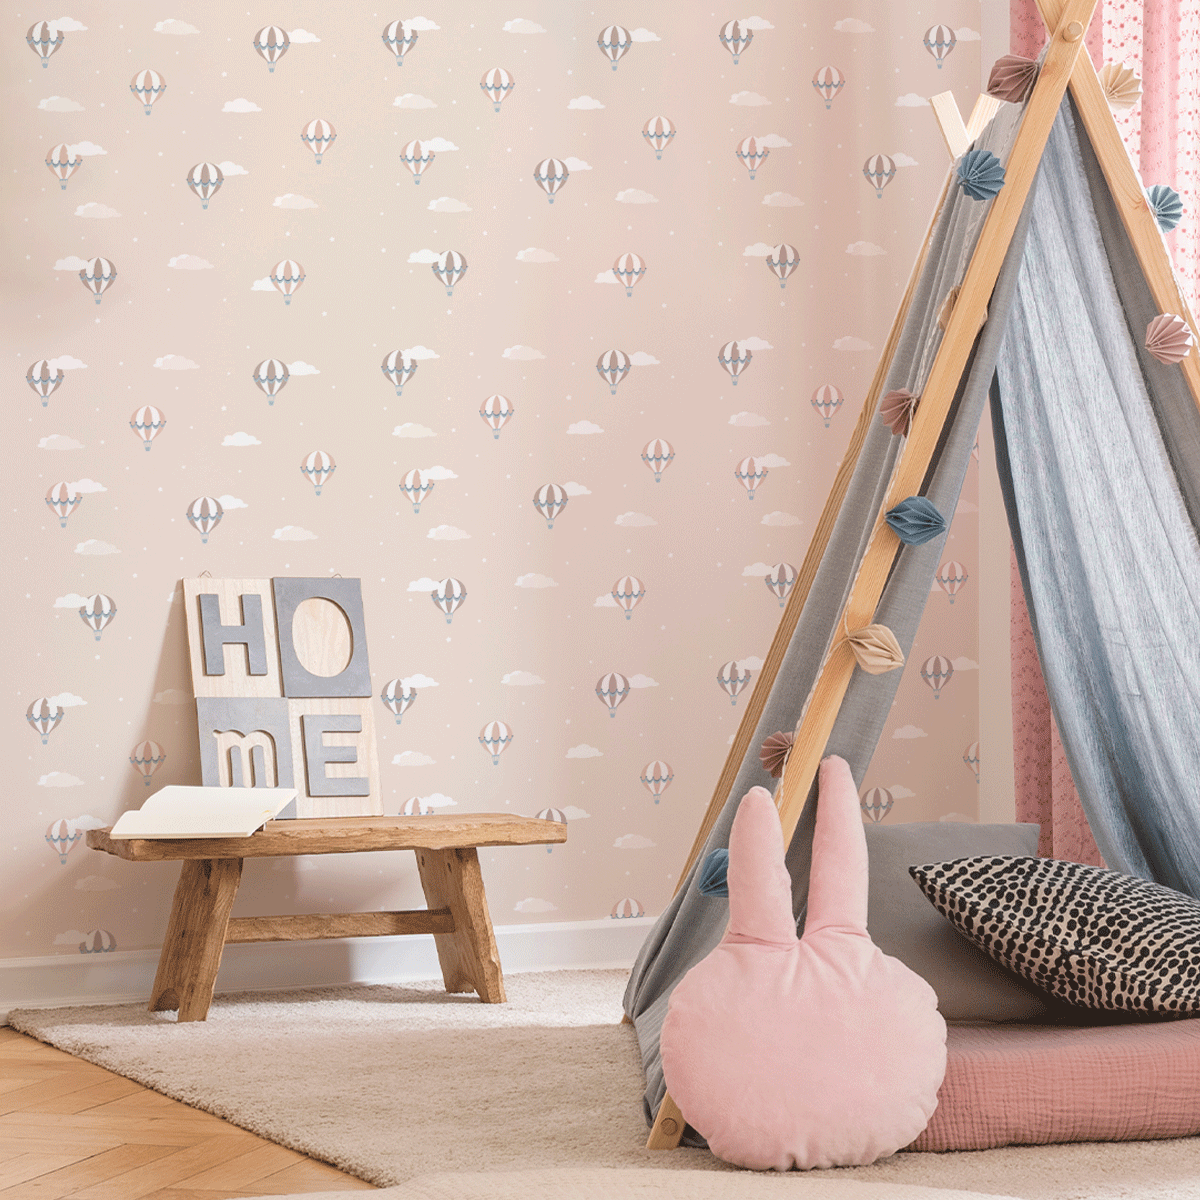 Livelynine Pink Wallpaper Peel and Stick Decorative Contact Paper for Girls  Bedroom Walls Dorm Kids Room School Locker Decor Waterproof Removable Self  Adhesive 16X80 Inch  Walmartcom